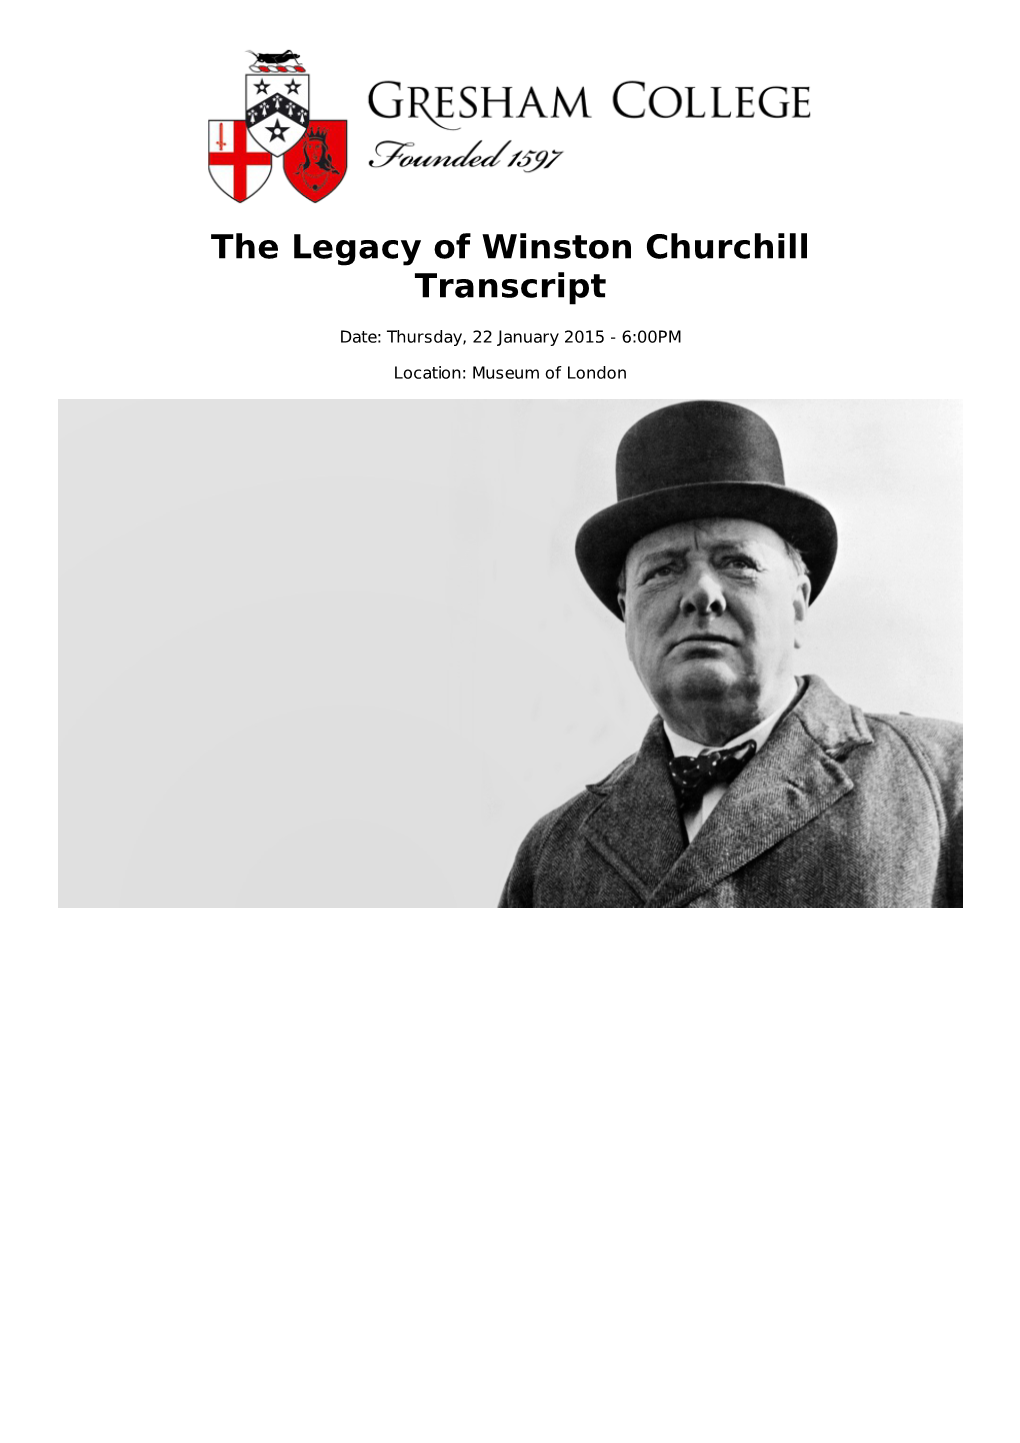 The Legacy of Winston Churchill Transcript